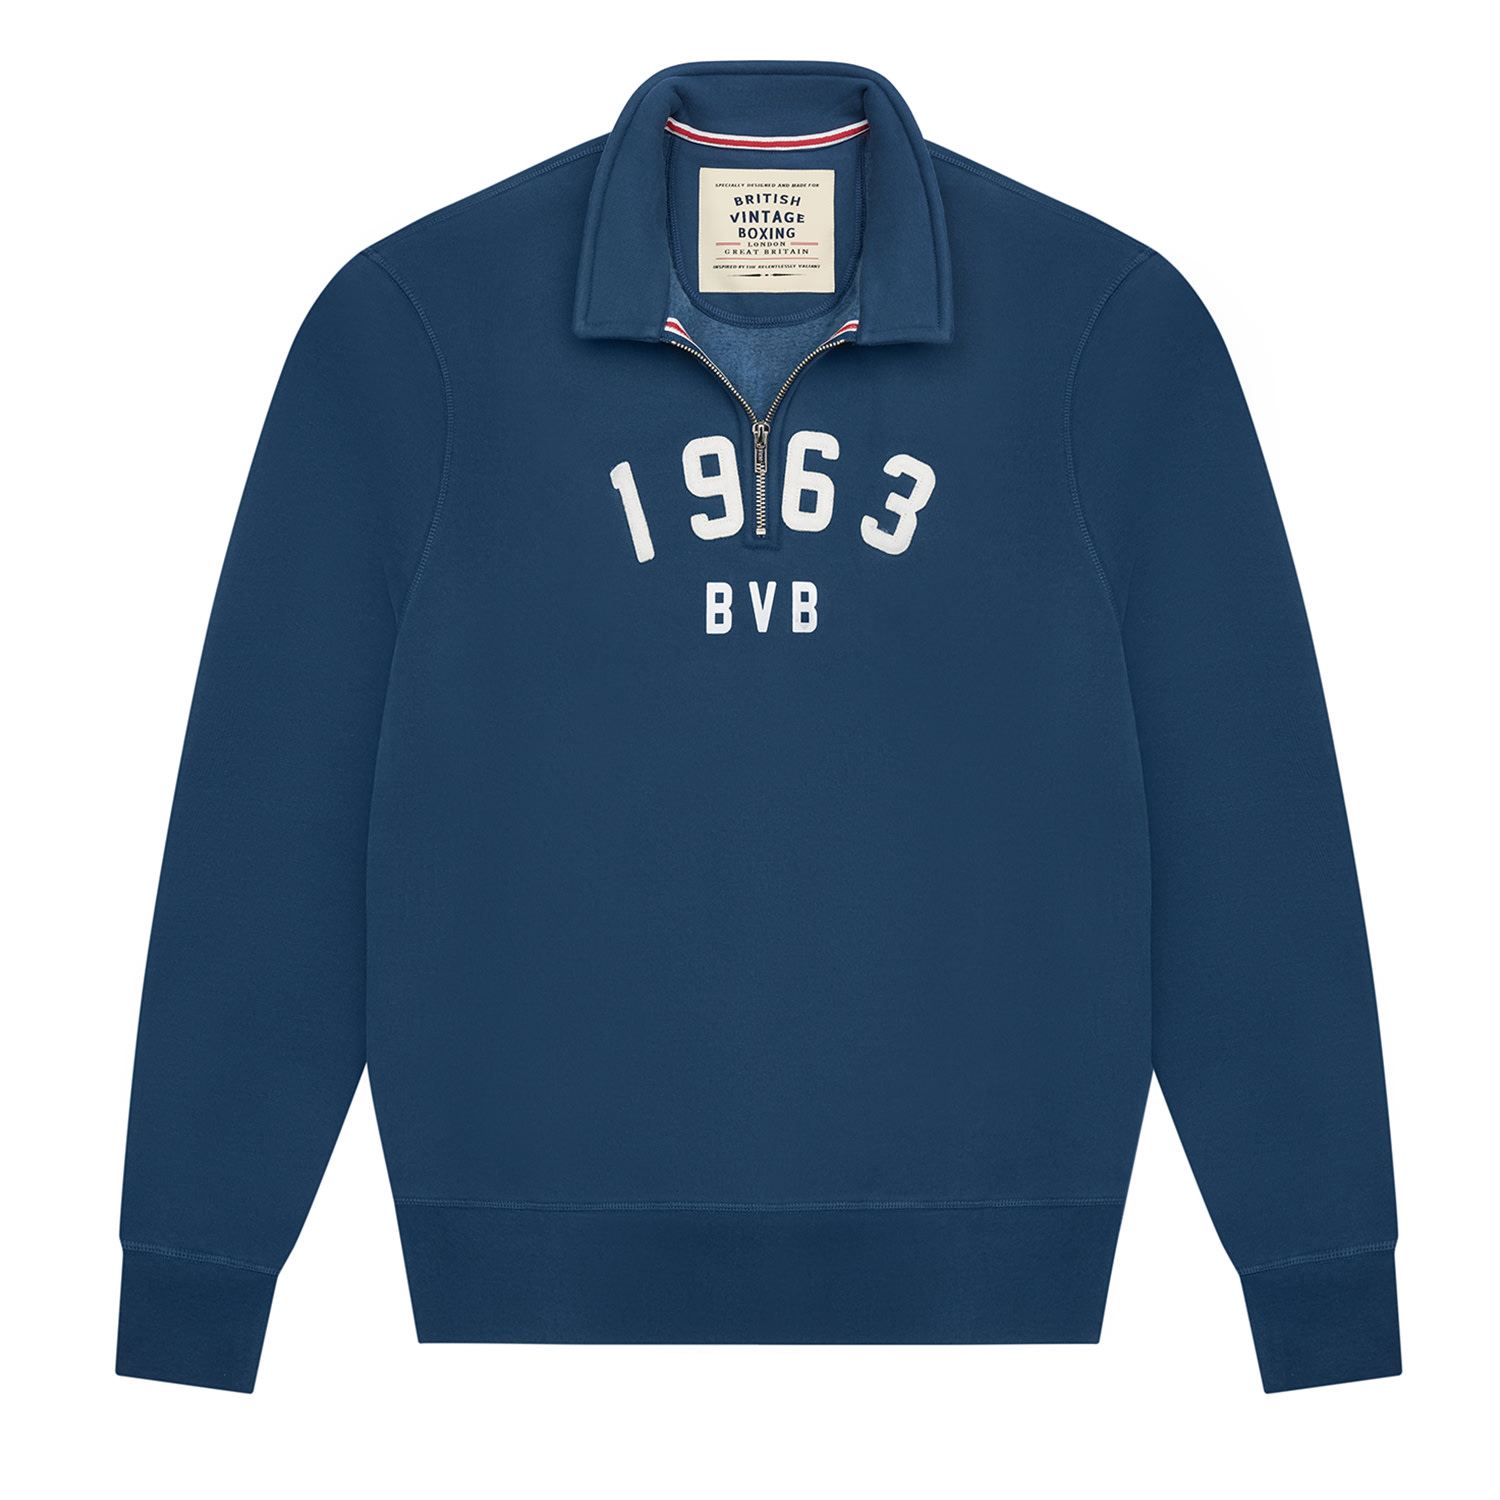 Blue Bvb 1963 Zip Sweatshirt Medium British Vintage Boxing